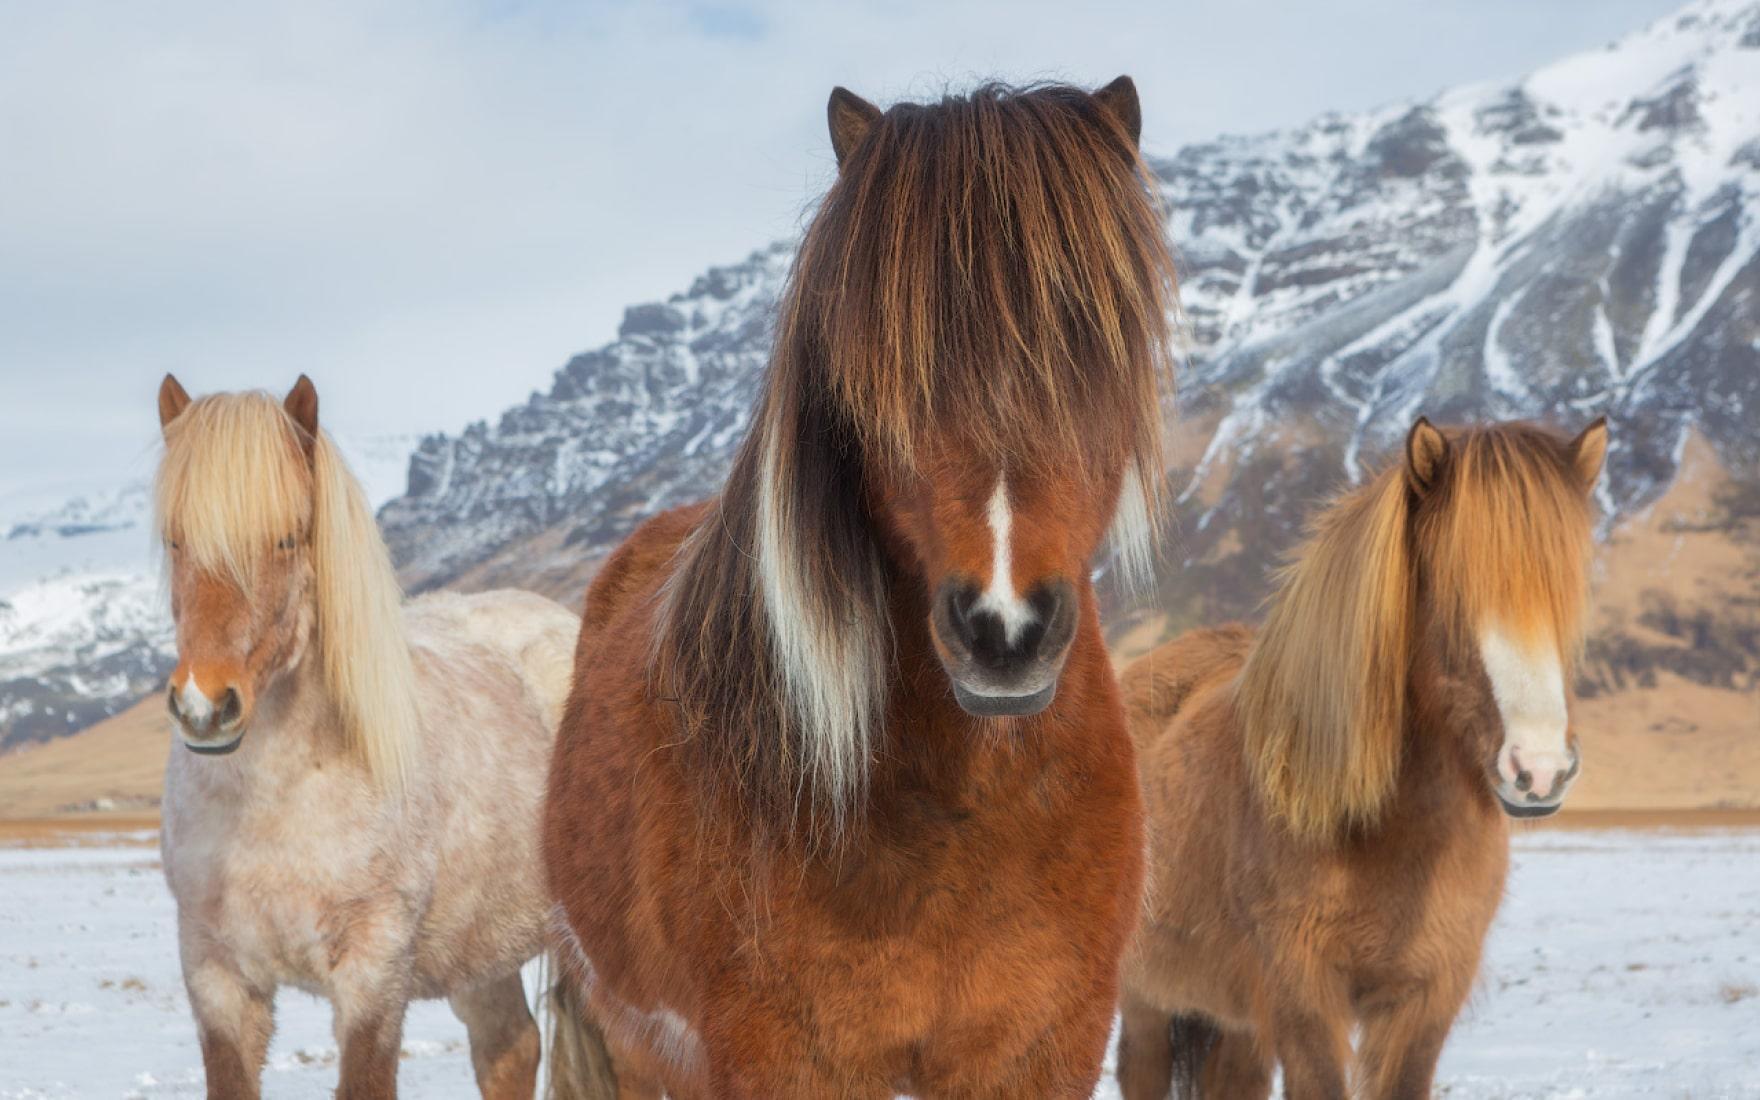 Highland Adventure: Exploring Iceland's Untamed Beauty(4)